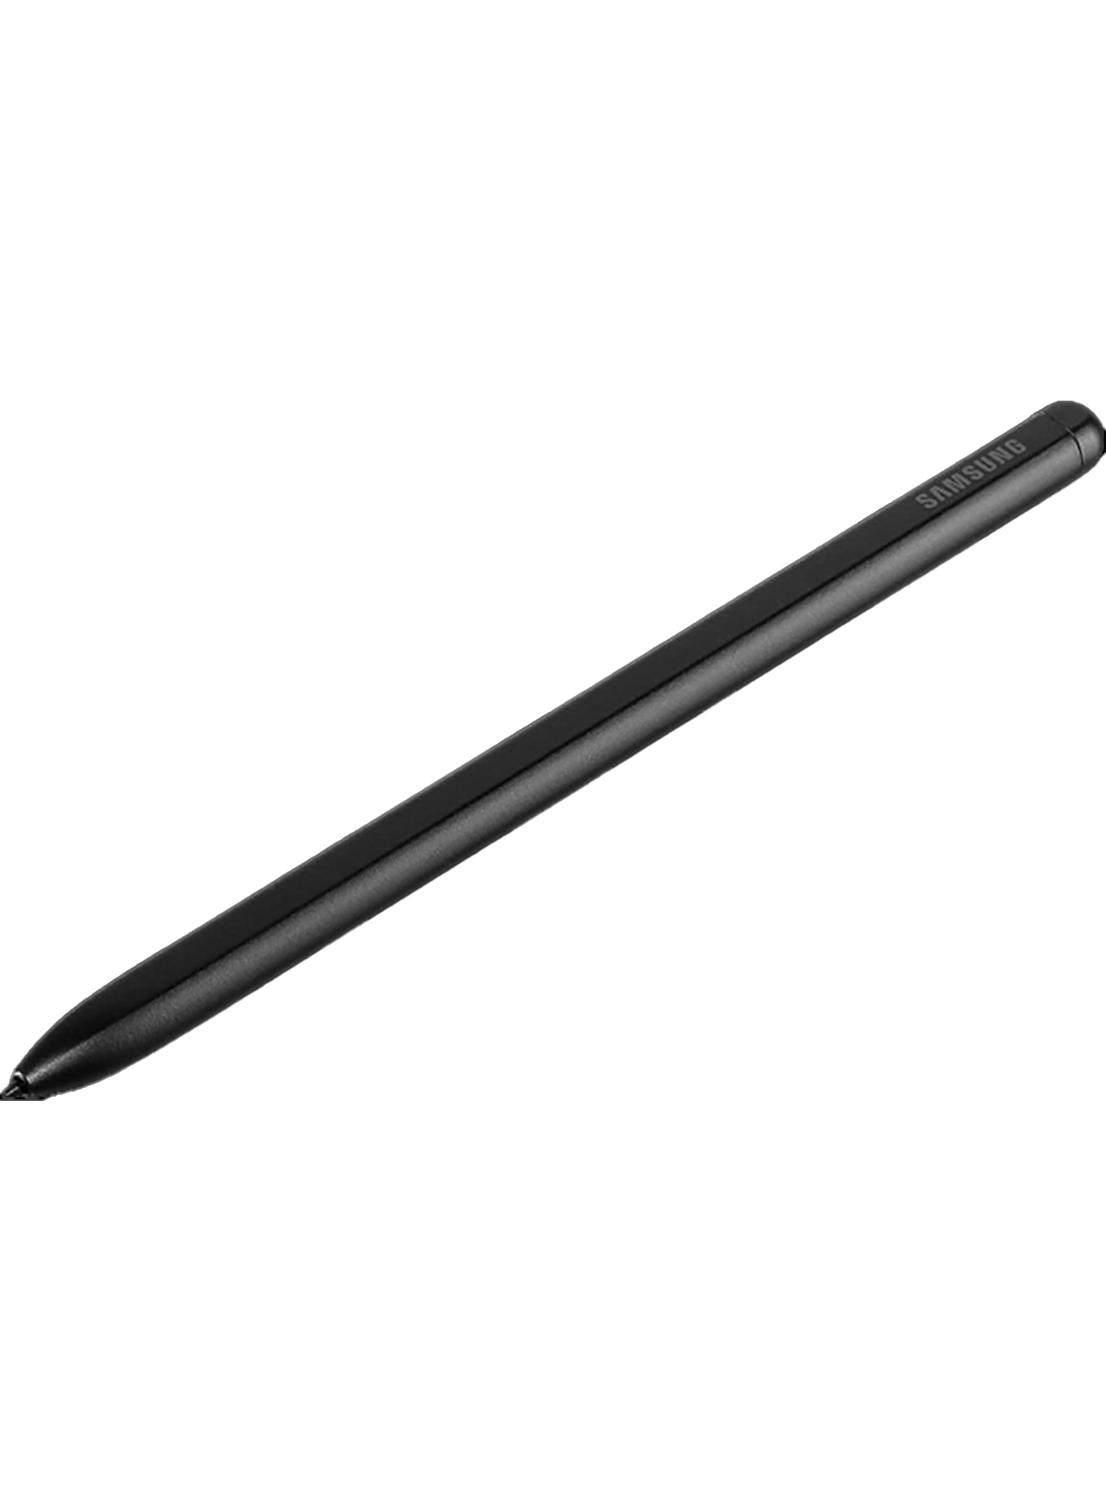 Original Samsung Galaxy Tab S7,S7+ S Pen EJ-PT870 schwarz GH96-13642A